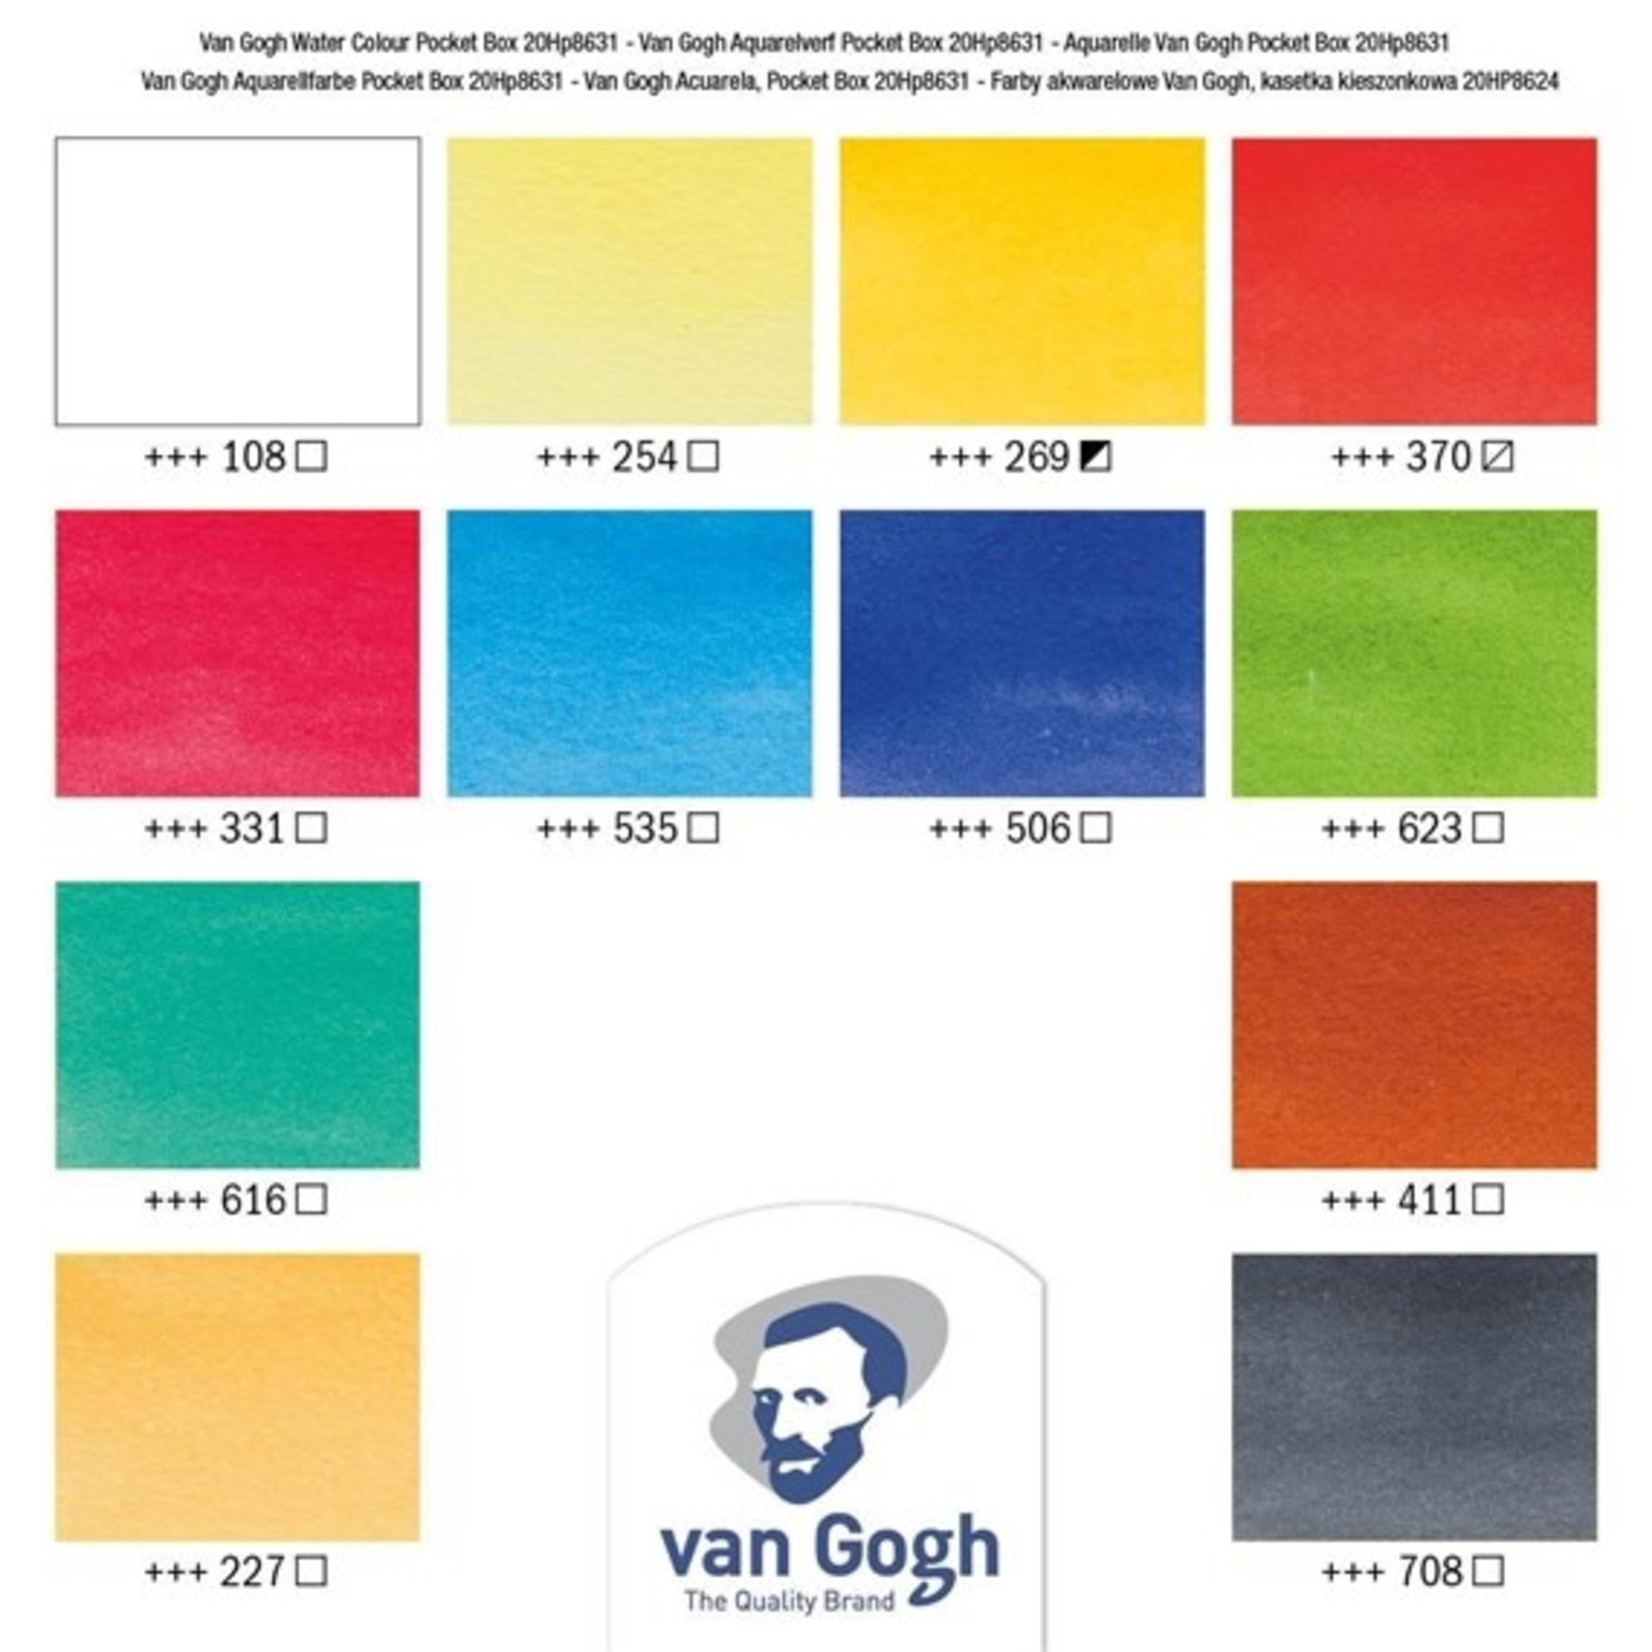 VAN GOGH WATERCOLOUR POCKET BOX 12/PANS GENERAL